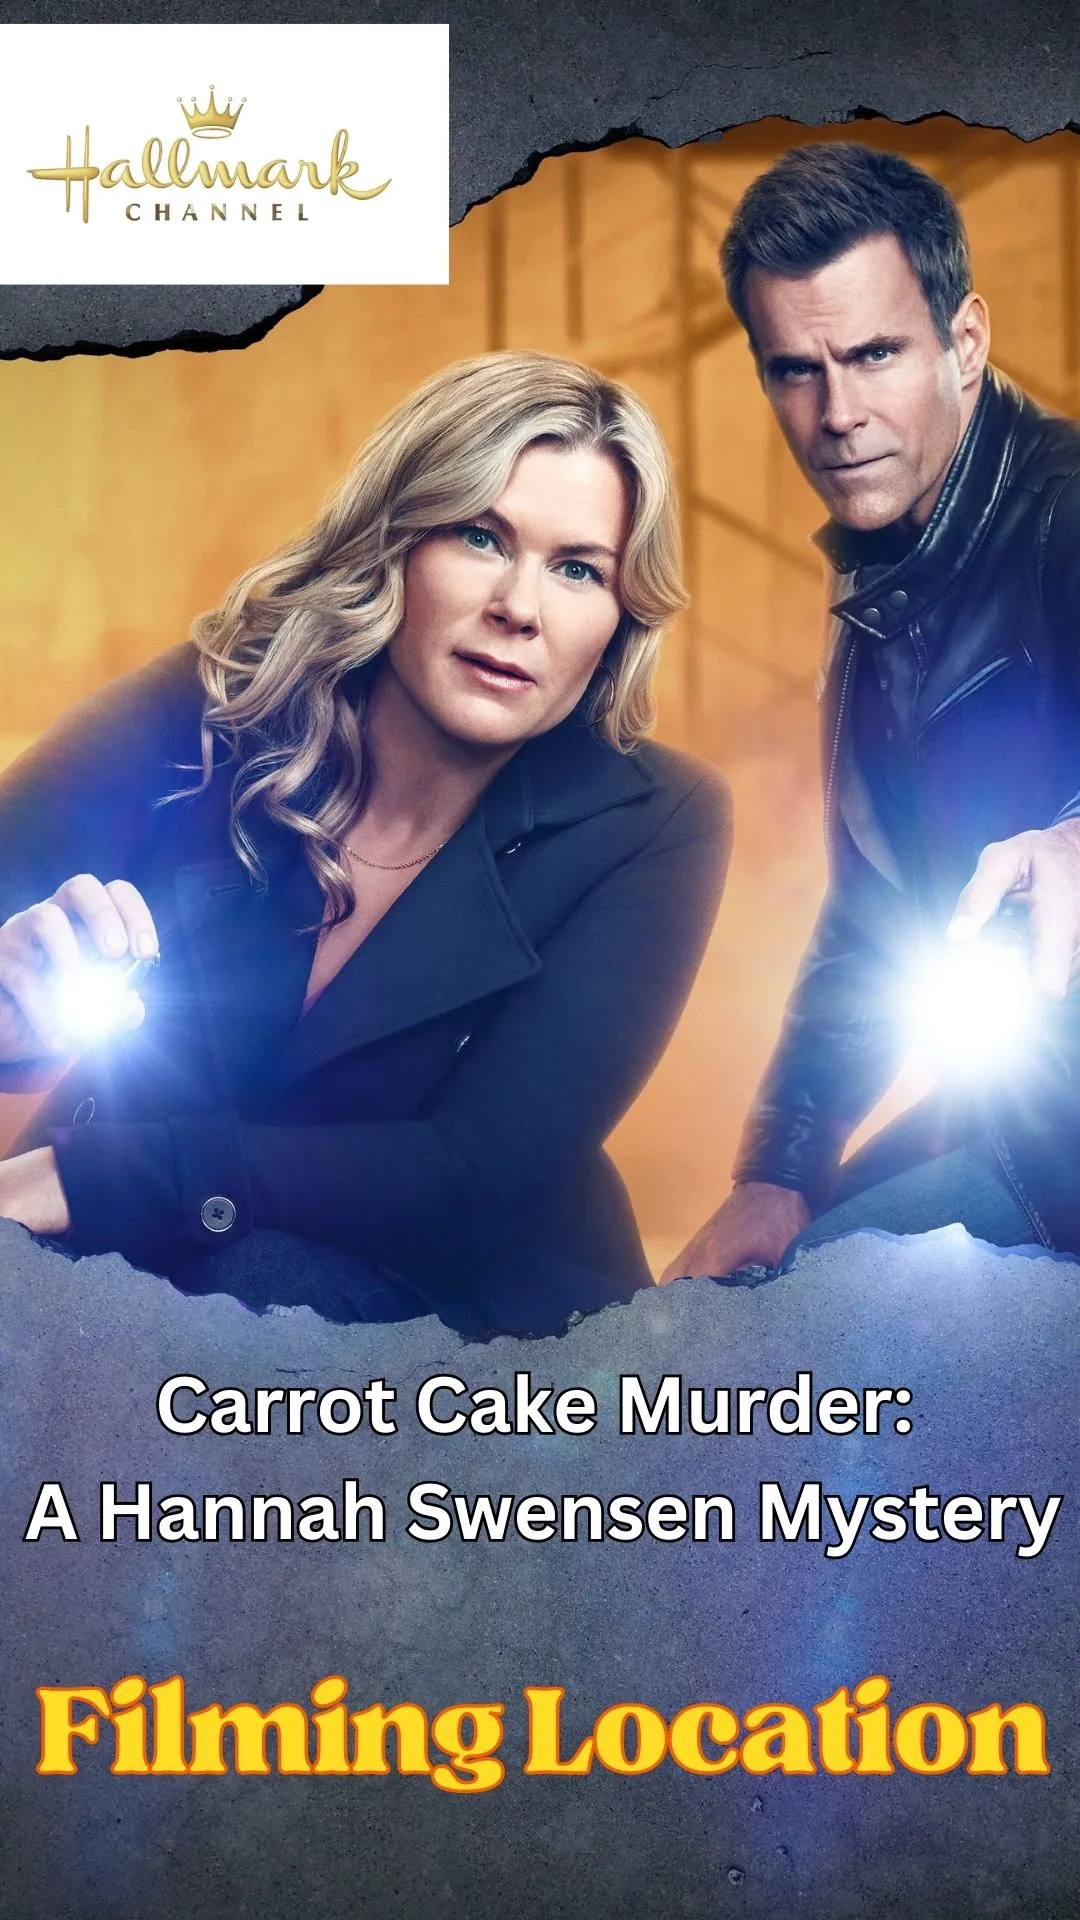 Carrot Cake Murder Filming Location